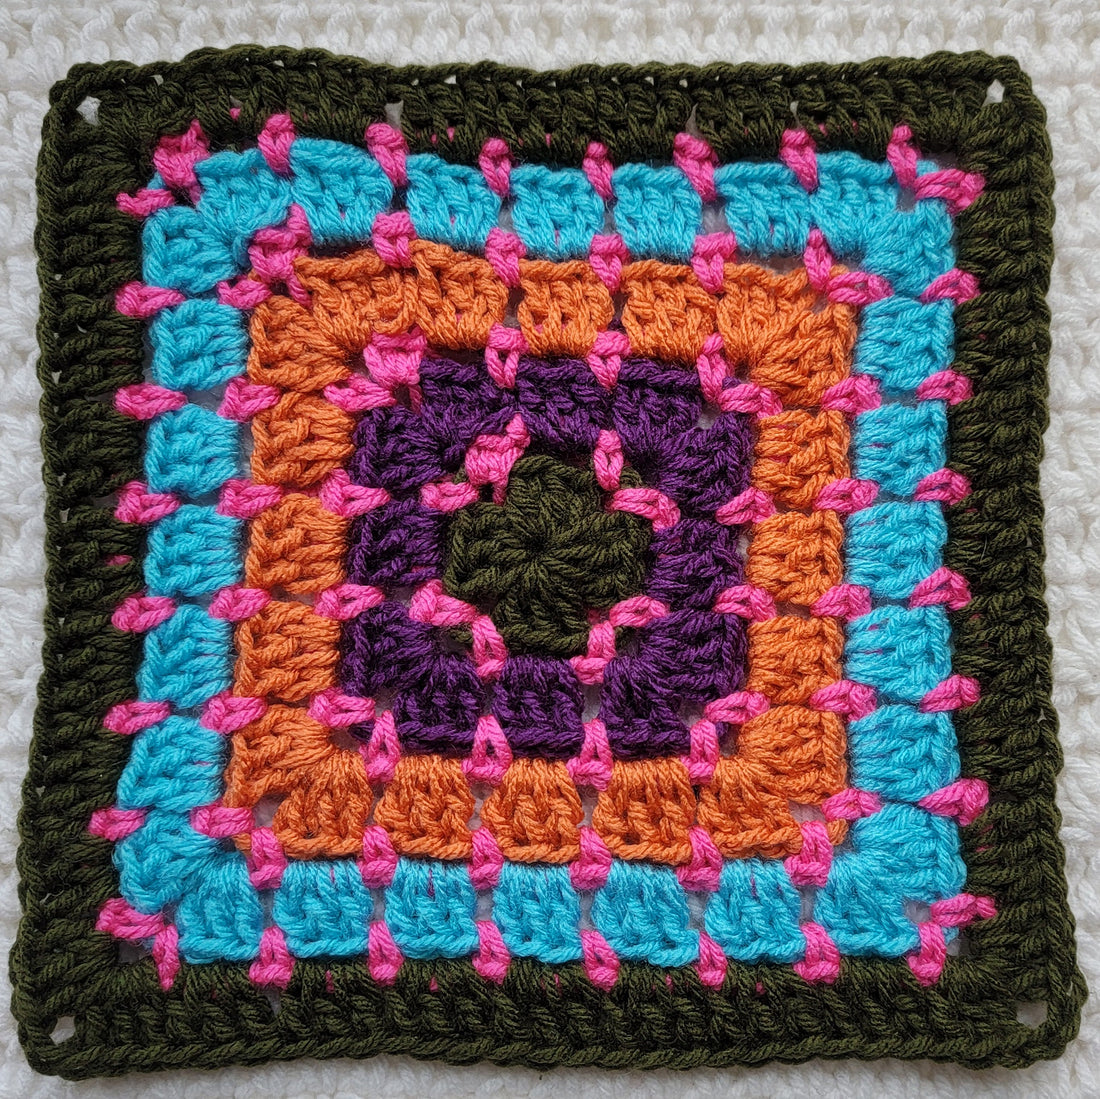 Free Crochet Pattern: Blocked Granny Square!